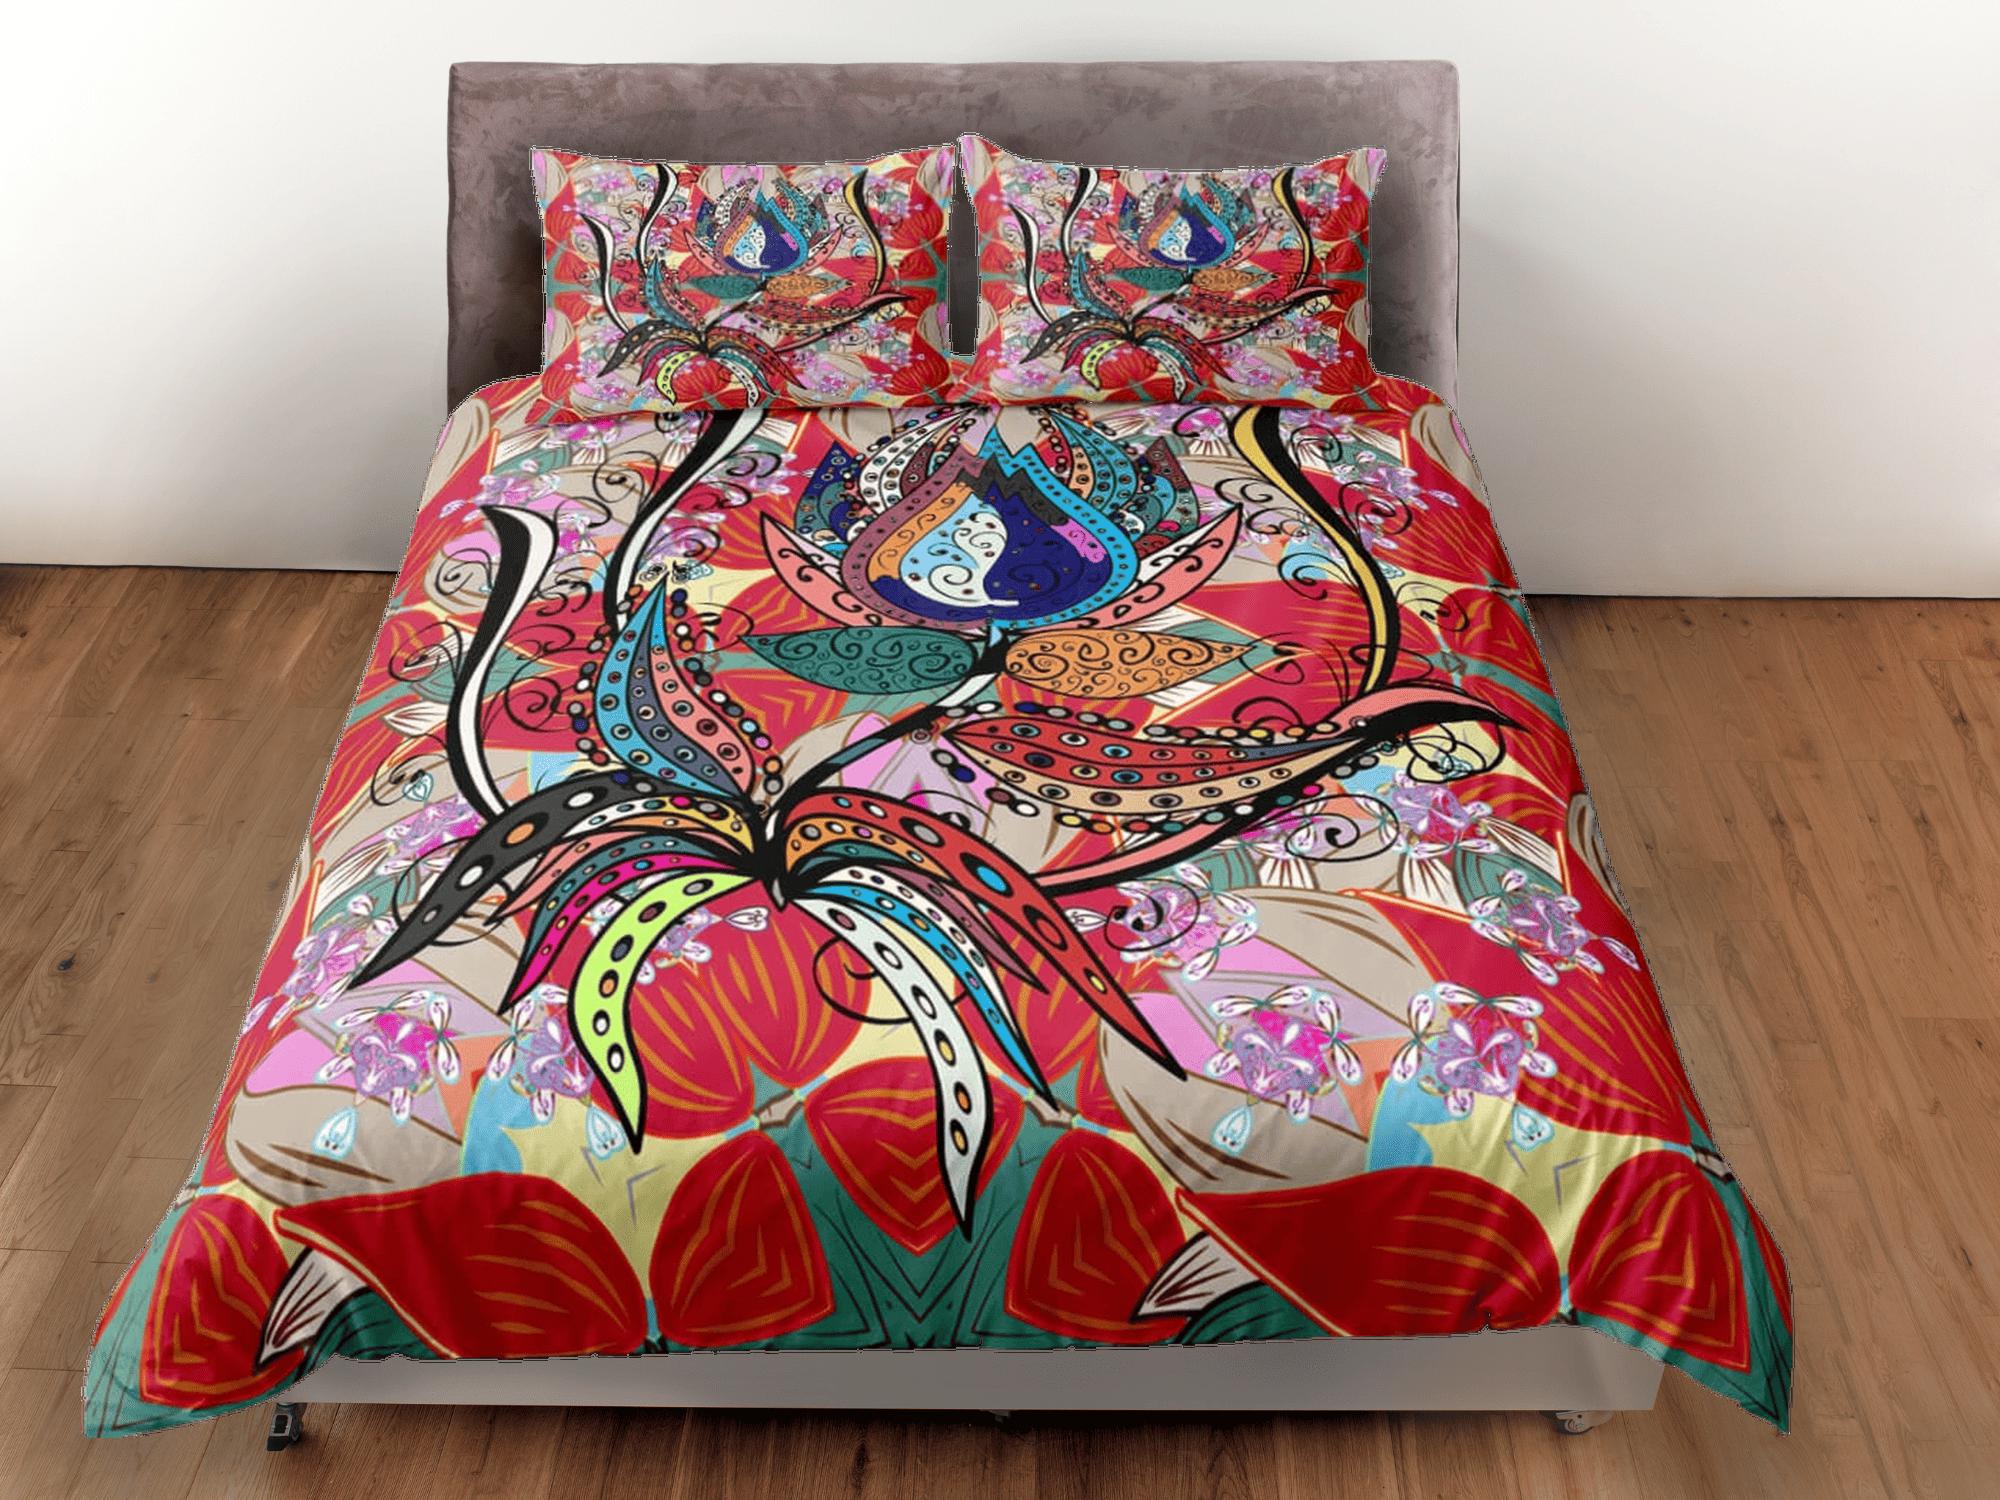 daintyduvet Artistic flower paisley red duvet cover set, aesthetic room decor bedding set full, king, queen size, abstract boho bedspread, luxury cover